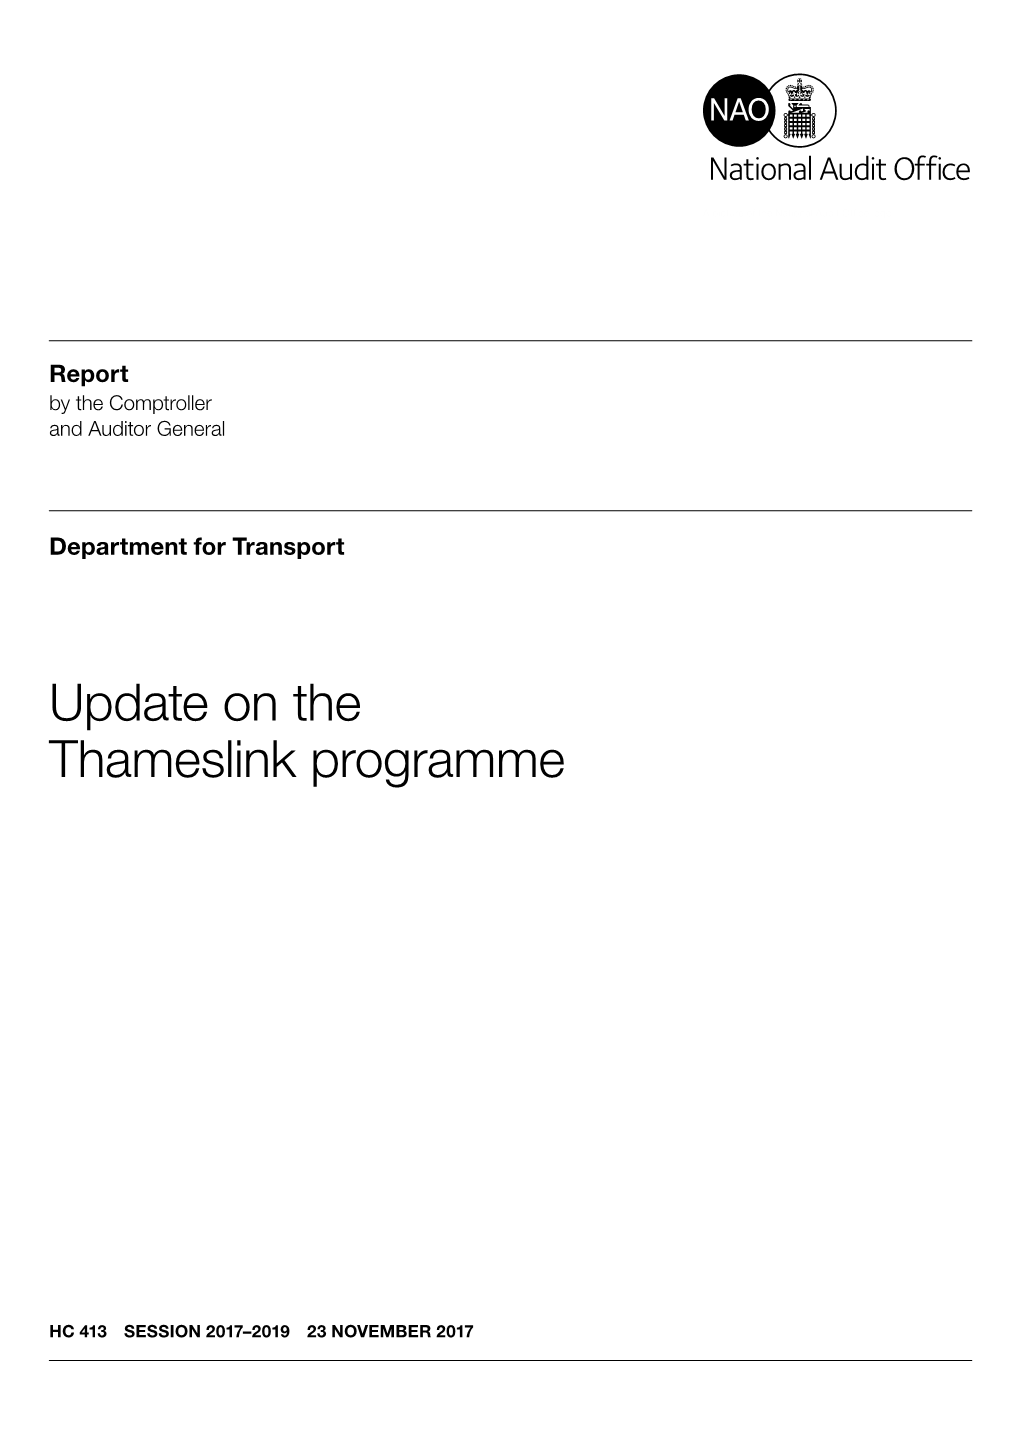 Update on the Thameslink Programme